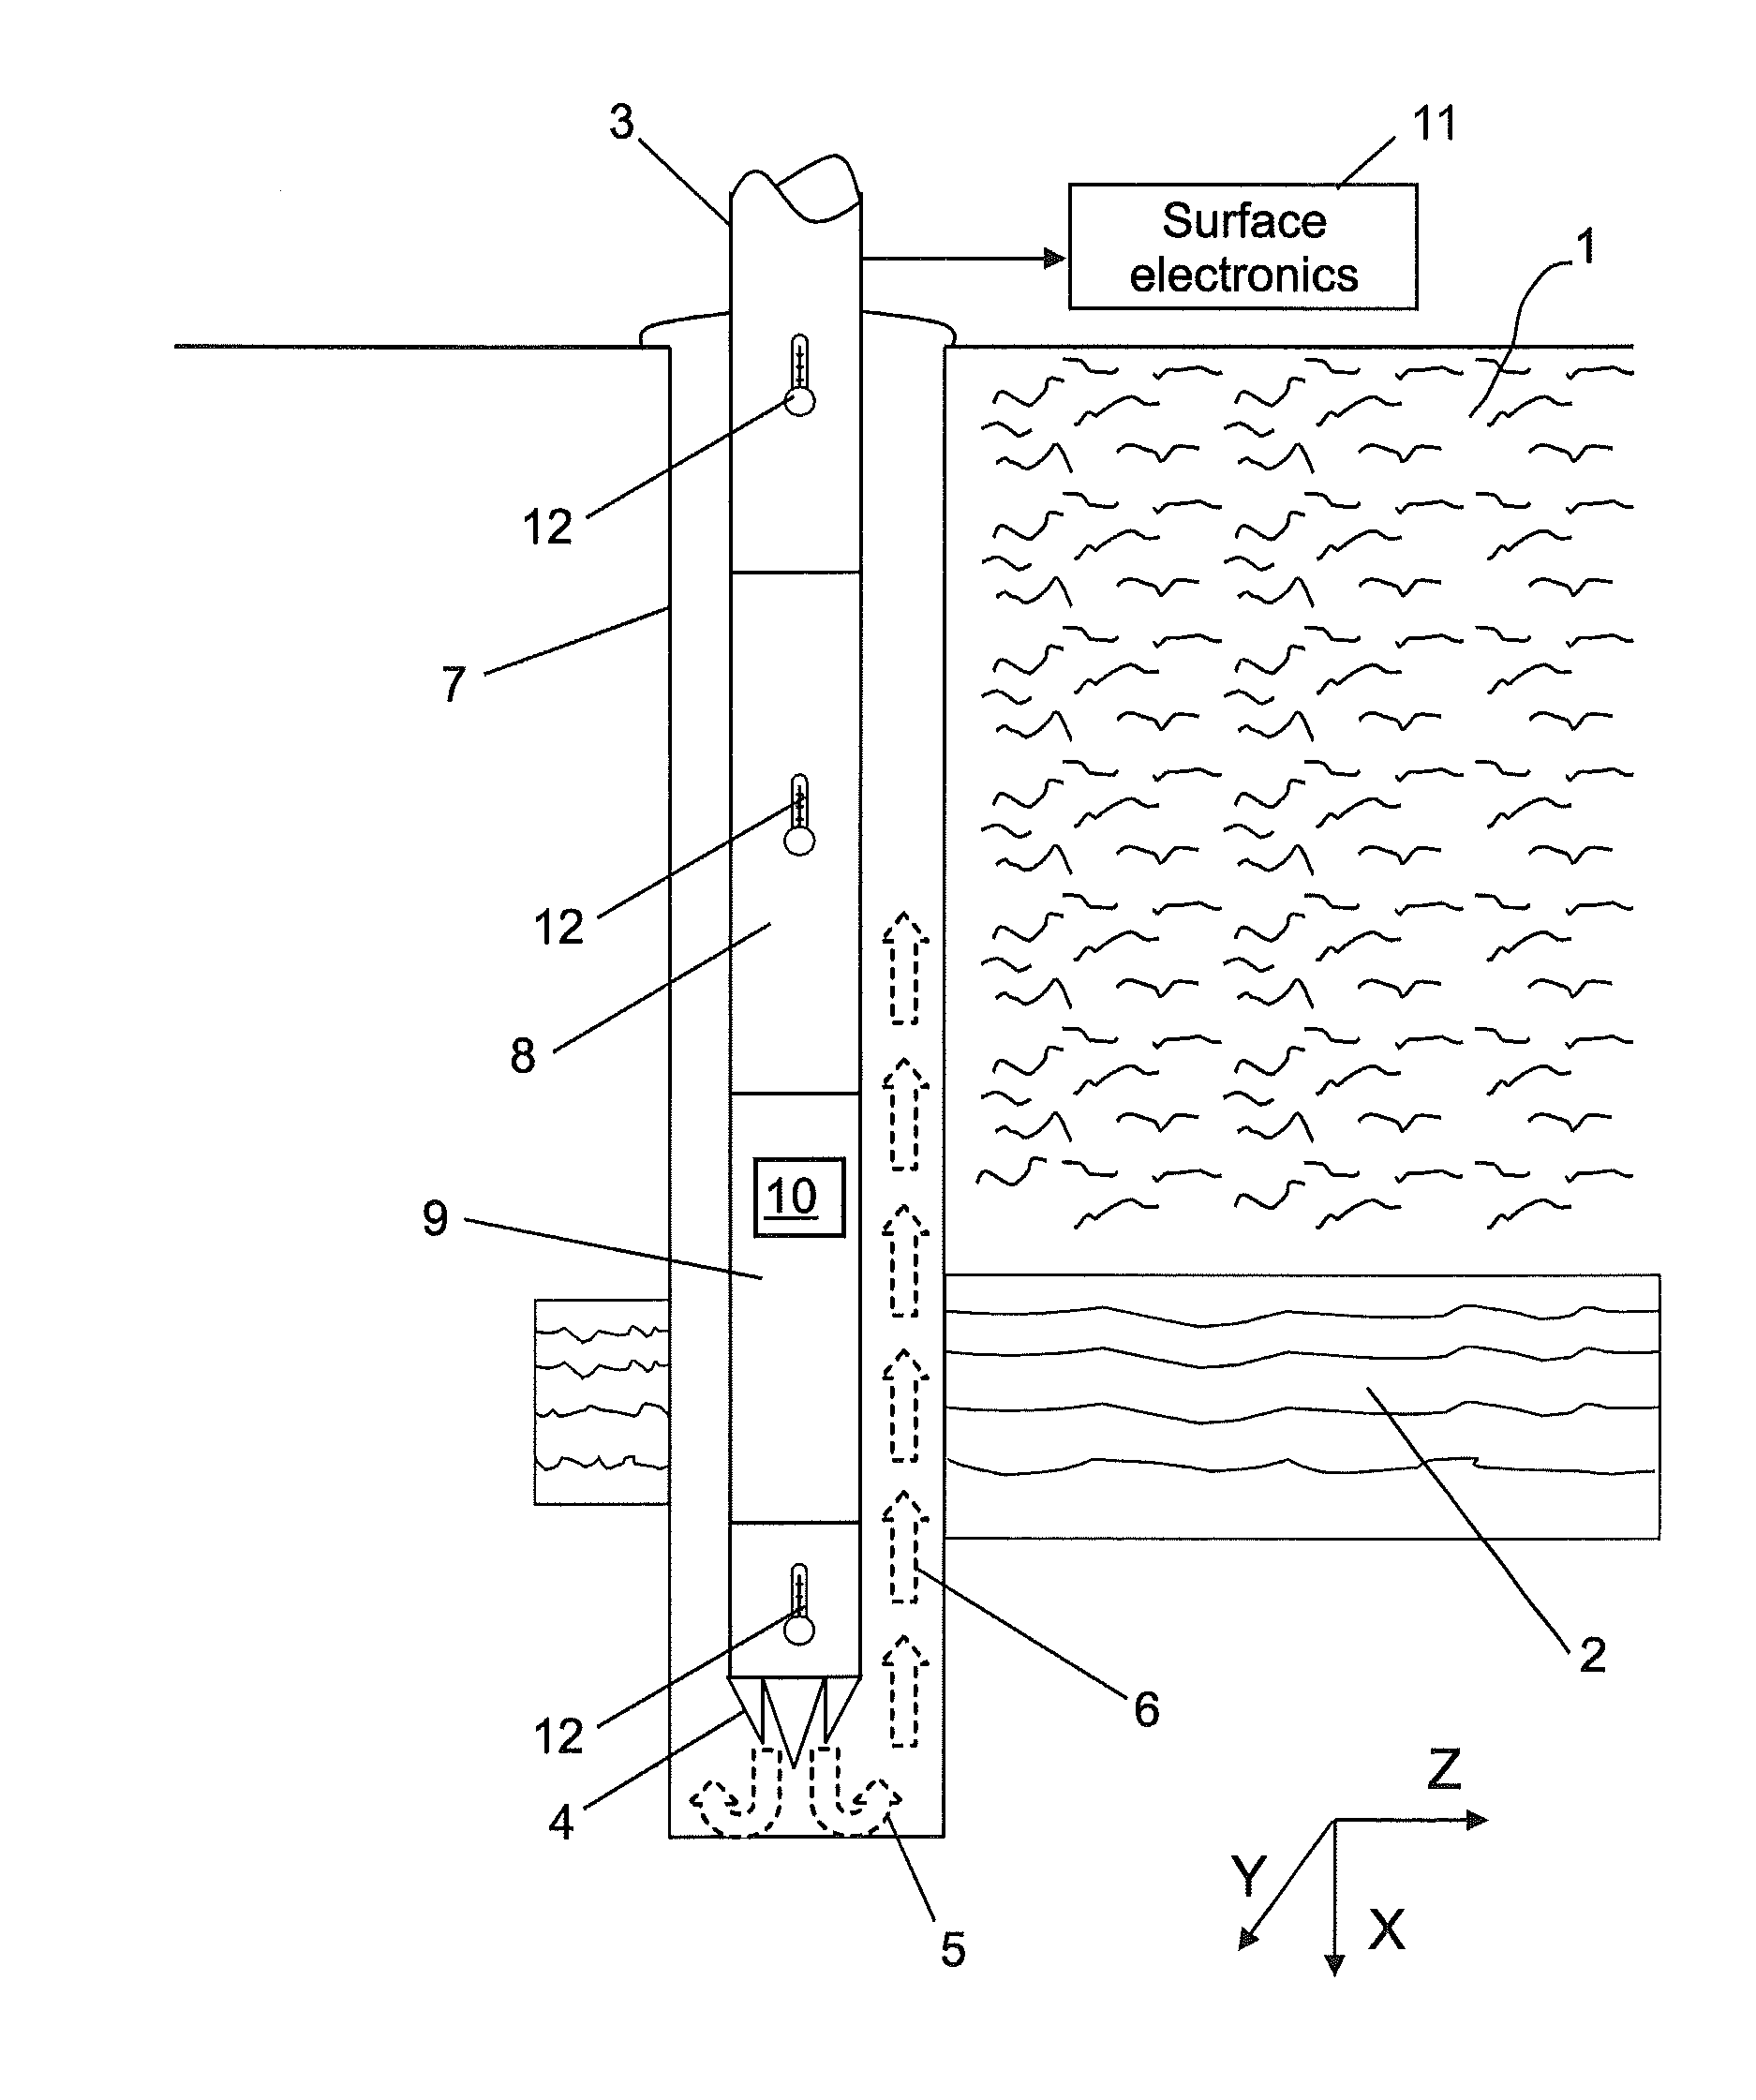 Distributed measurement of mud temperature